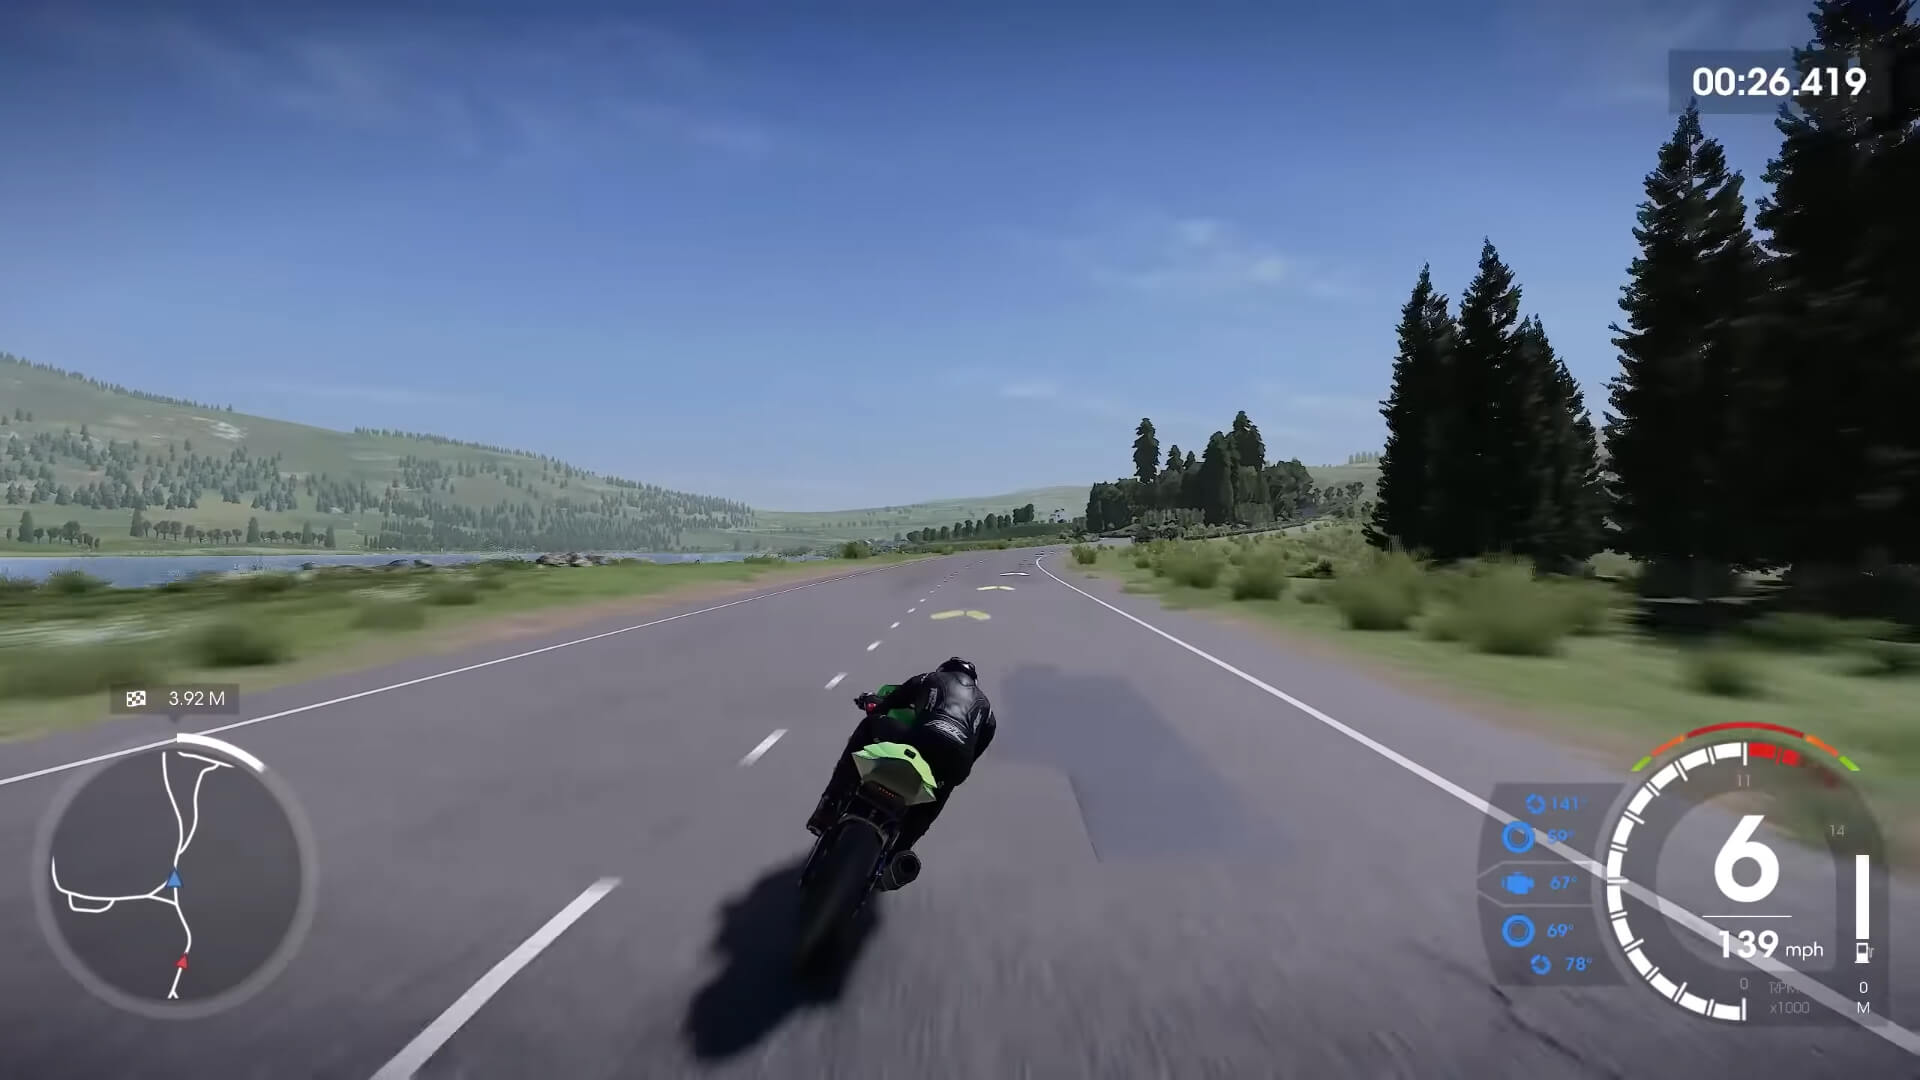 TT Isle of Man Ride on the Edge 2 скриншот (фото)